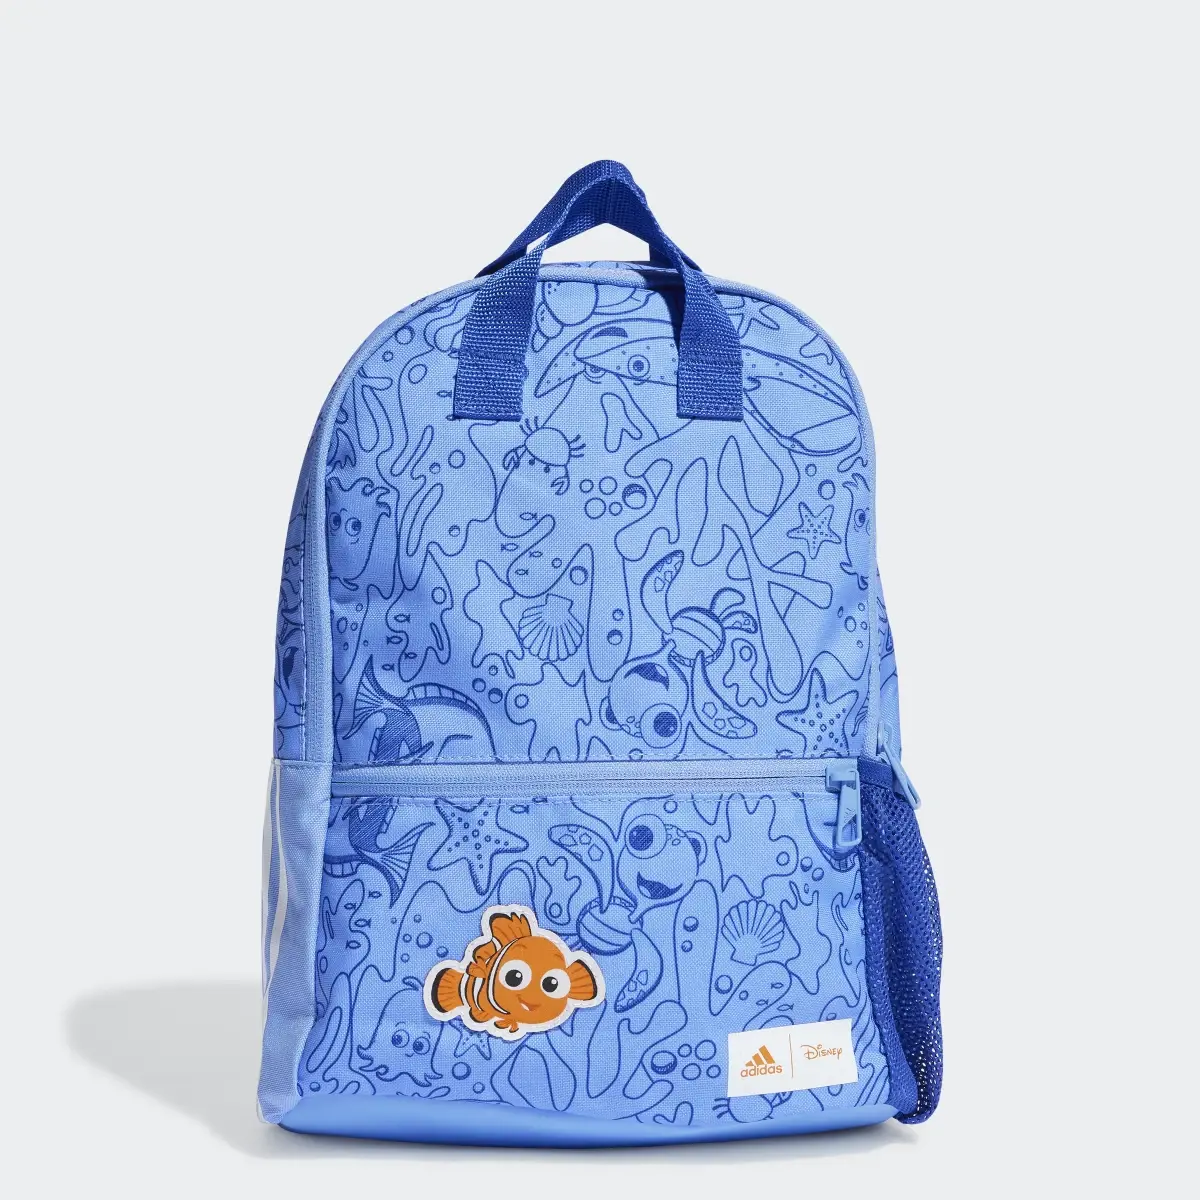 Adidas x Disney Pixar Finding Nemo Backpack. 1